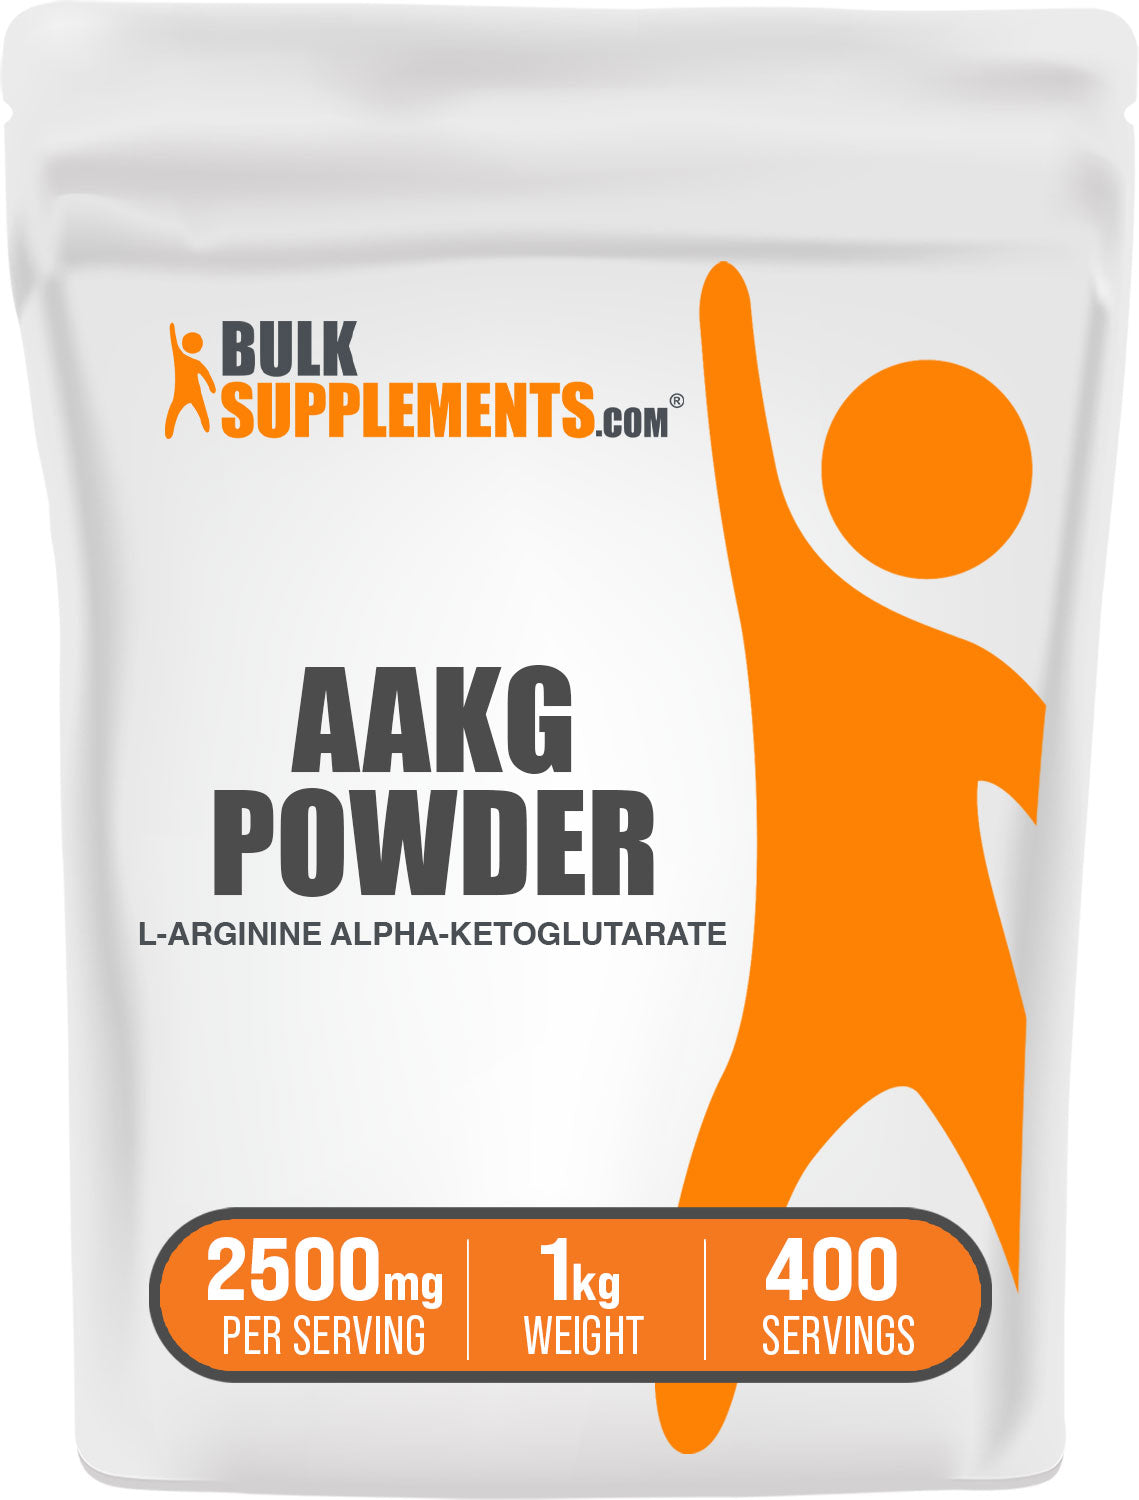 AAKG powder 1kg bag